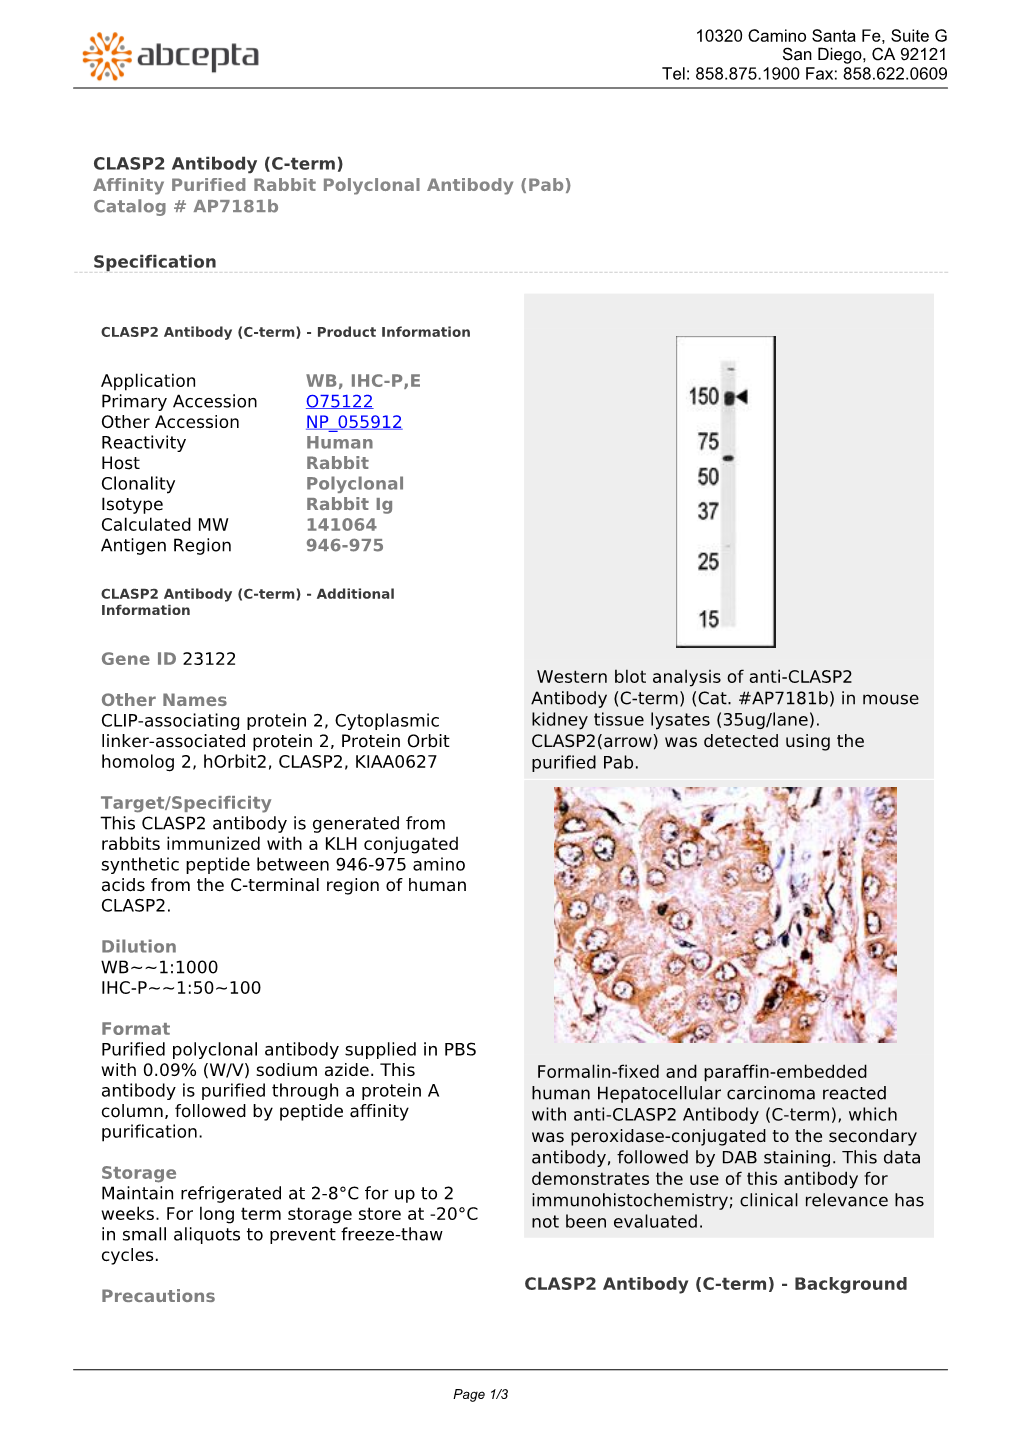 CLASP2 Antibody (C-Term) Affinity Purified Rabbit Polyclonal Antibody (Pab) Catalog # Ap7181b